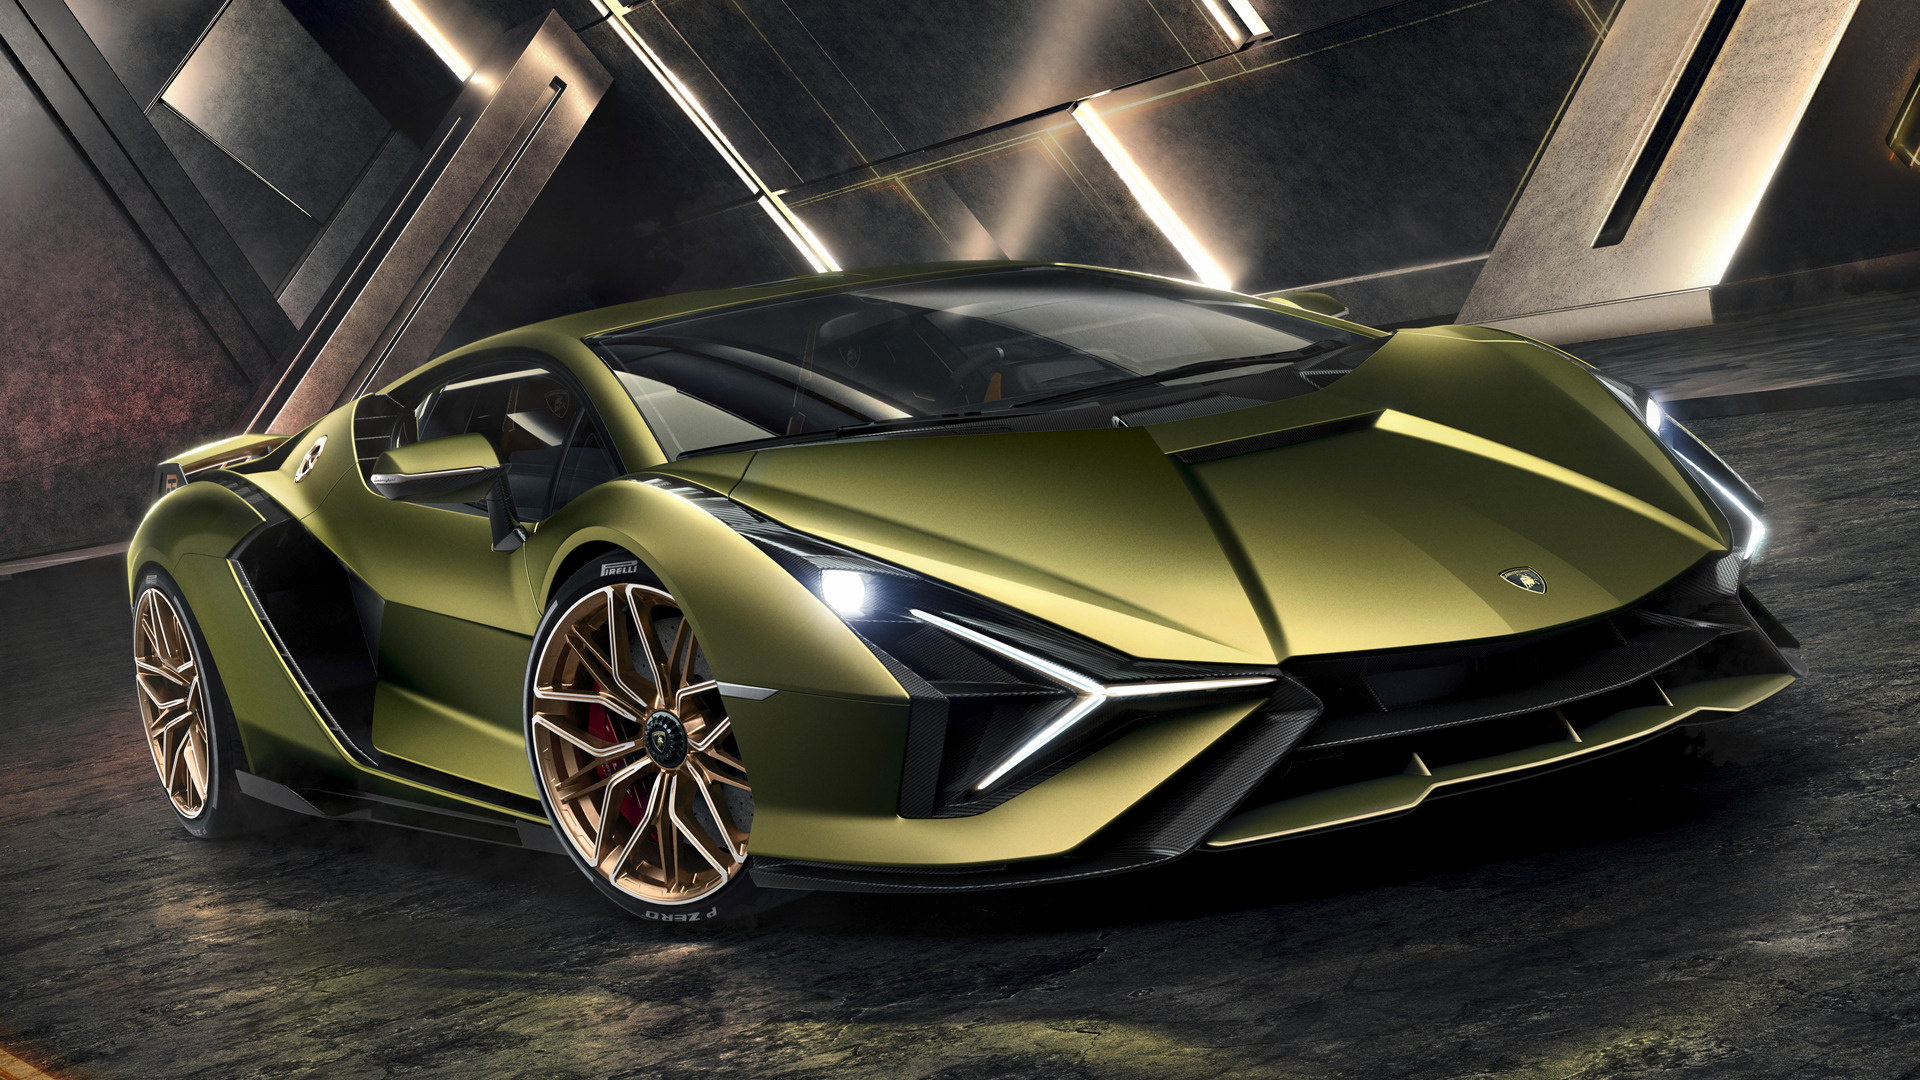 2020 Lamborghini Sian FKP 37 - Hintergrundbilder und ...